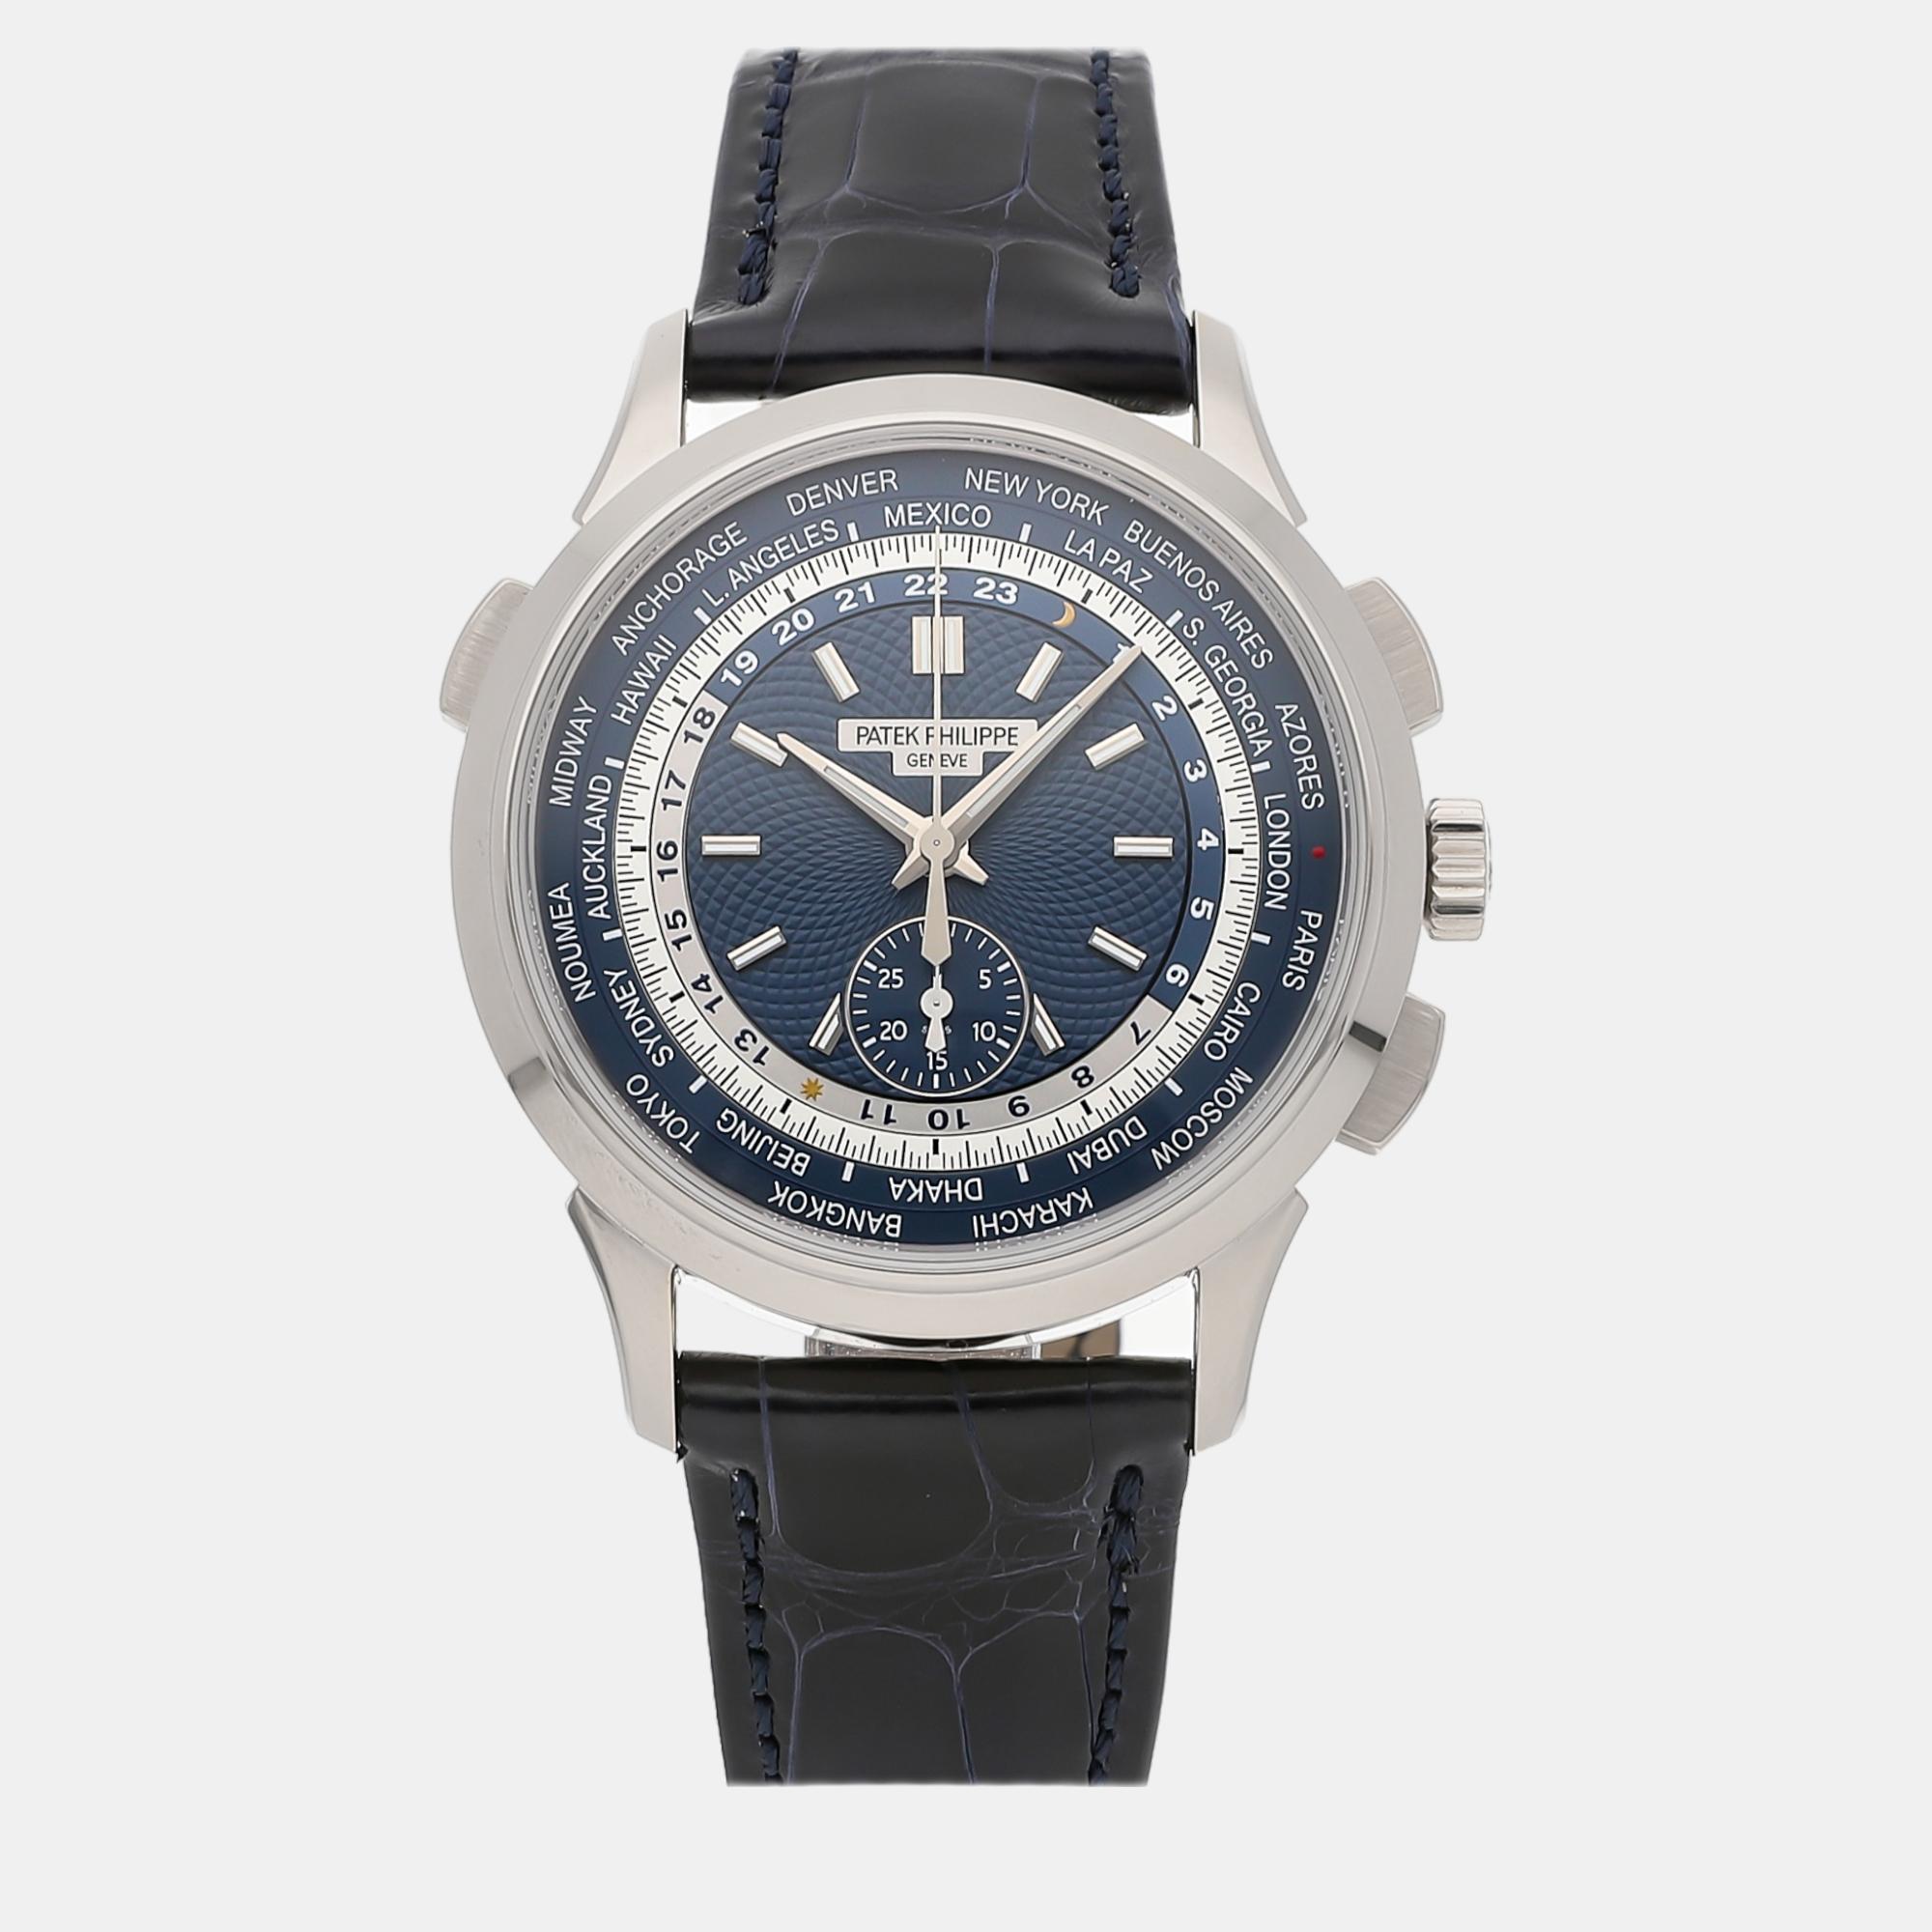 Patek philippe blue 18k white gold complications 5930g-010 automatic men's wristwatch 39 mm